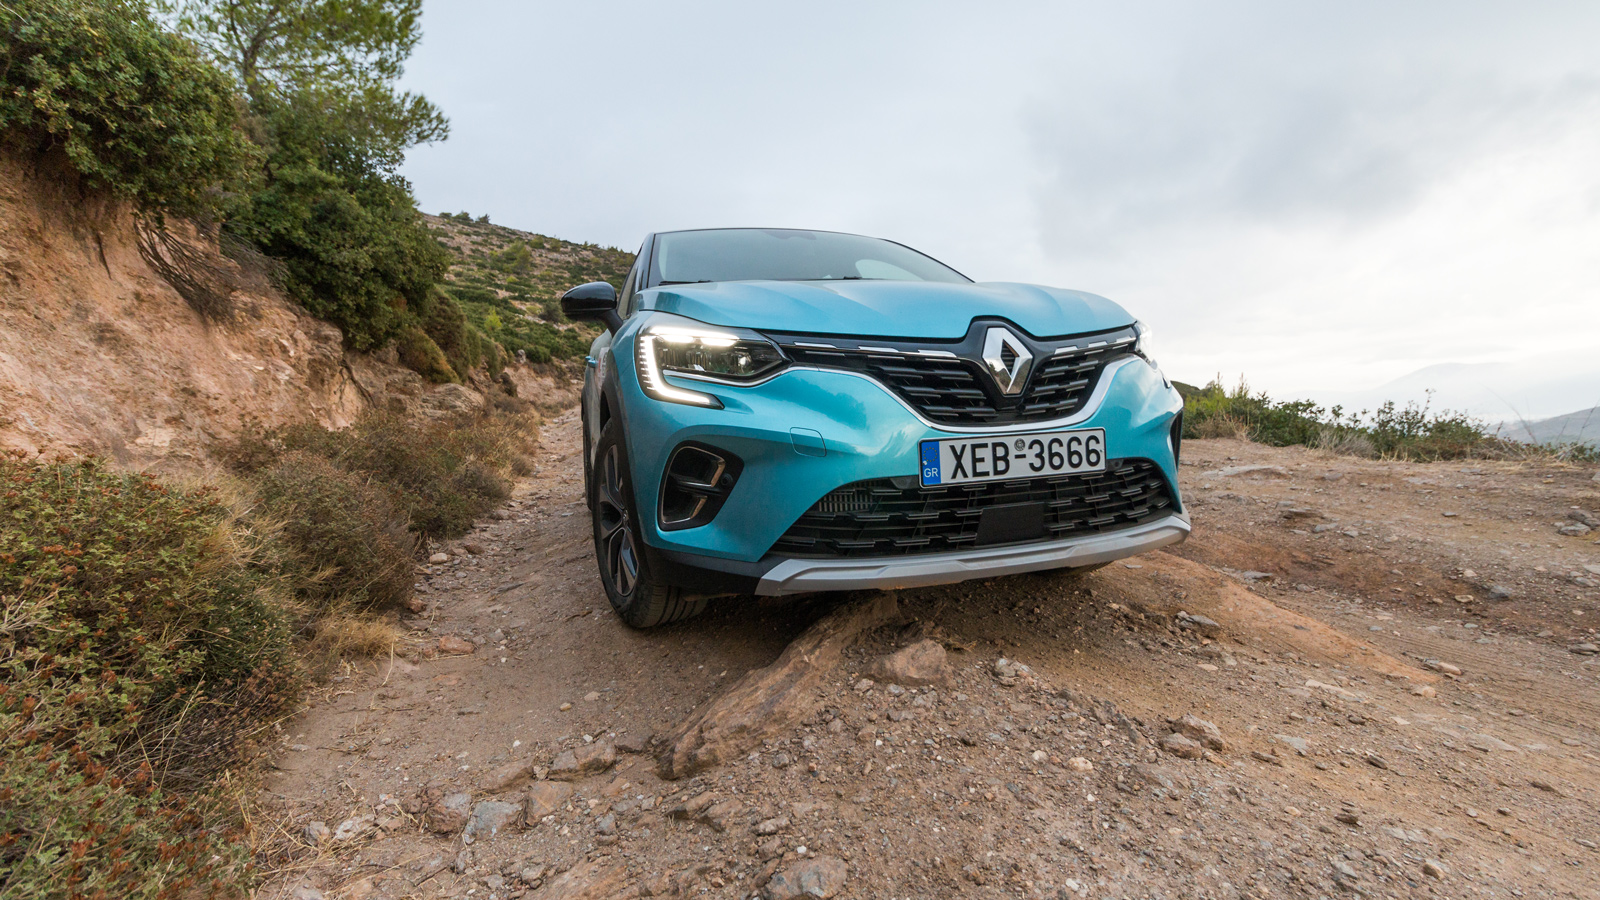 Renault Captur: Όμορφο, πρακτικό και ικανό σε off road διαδρομές